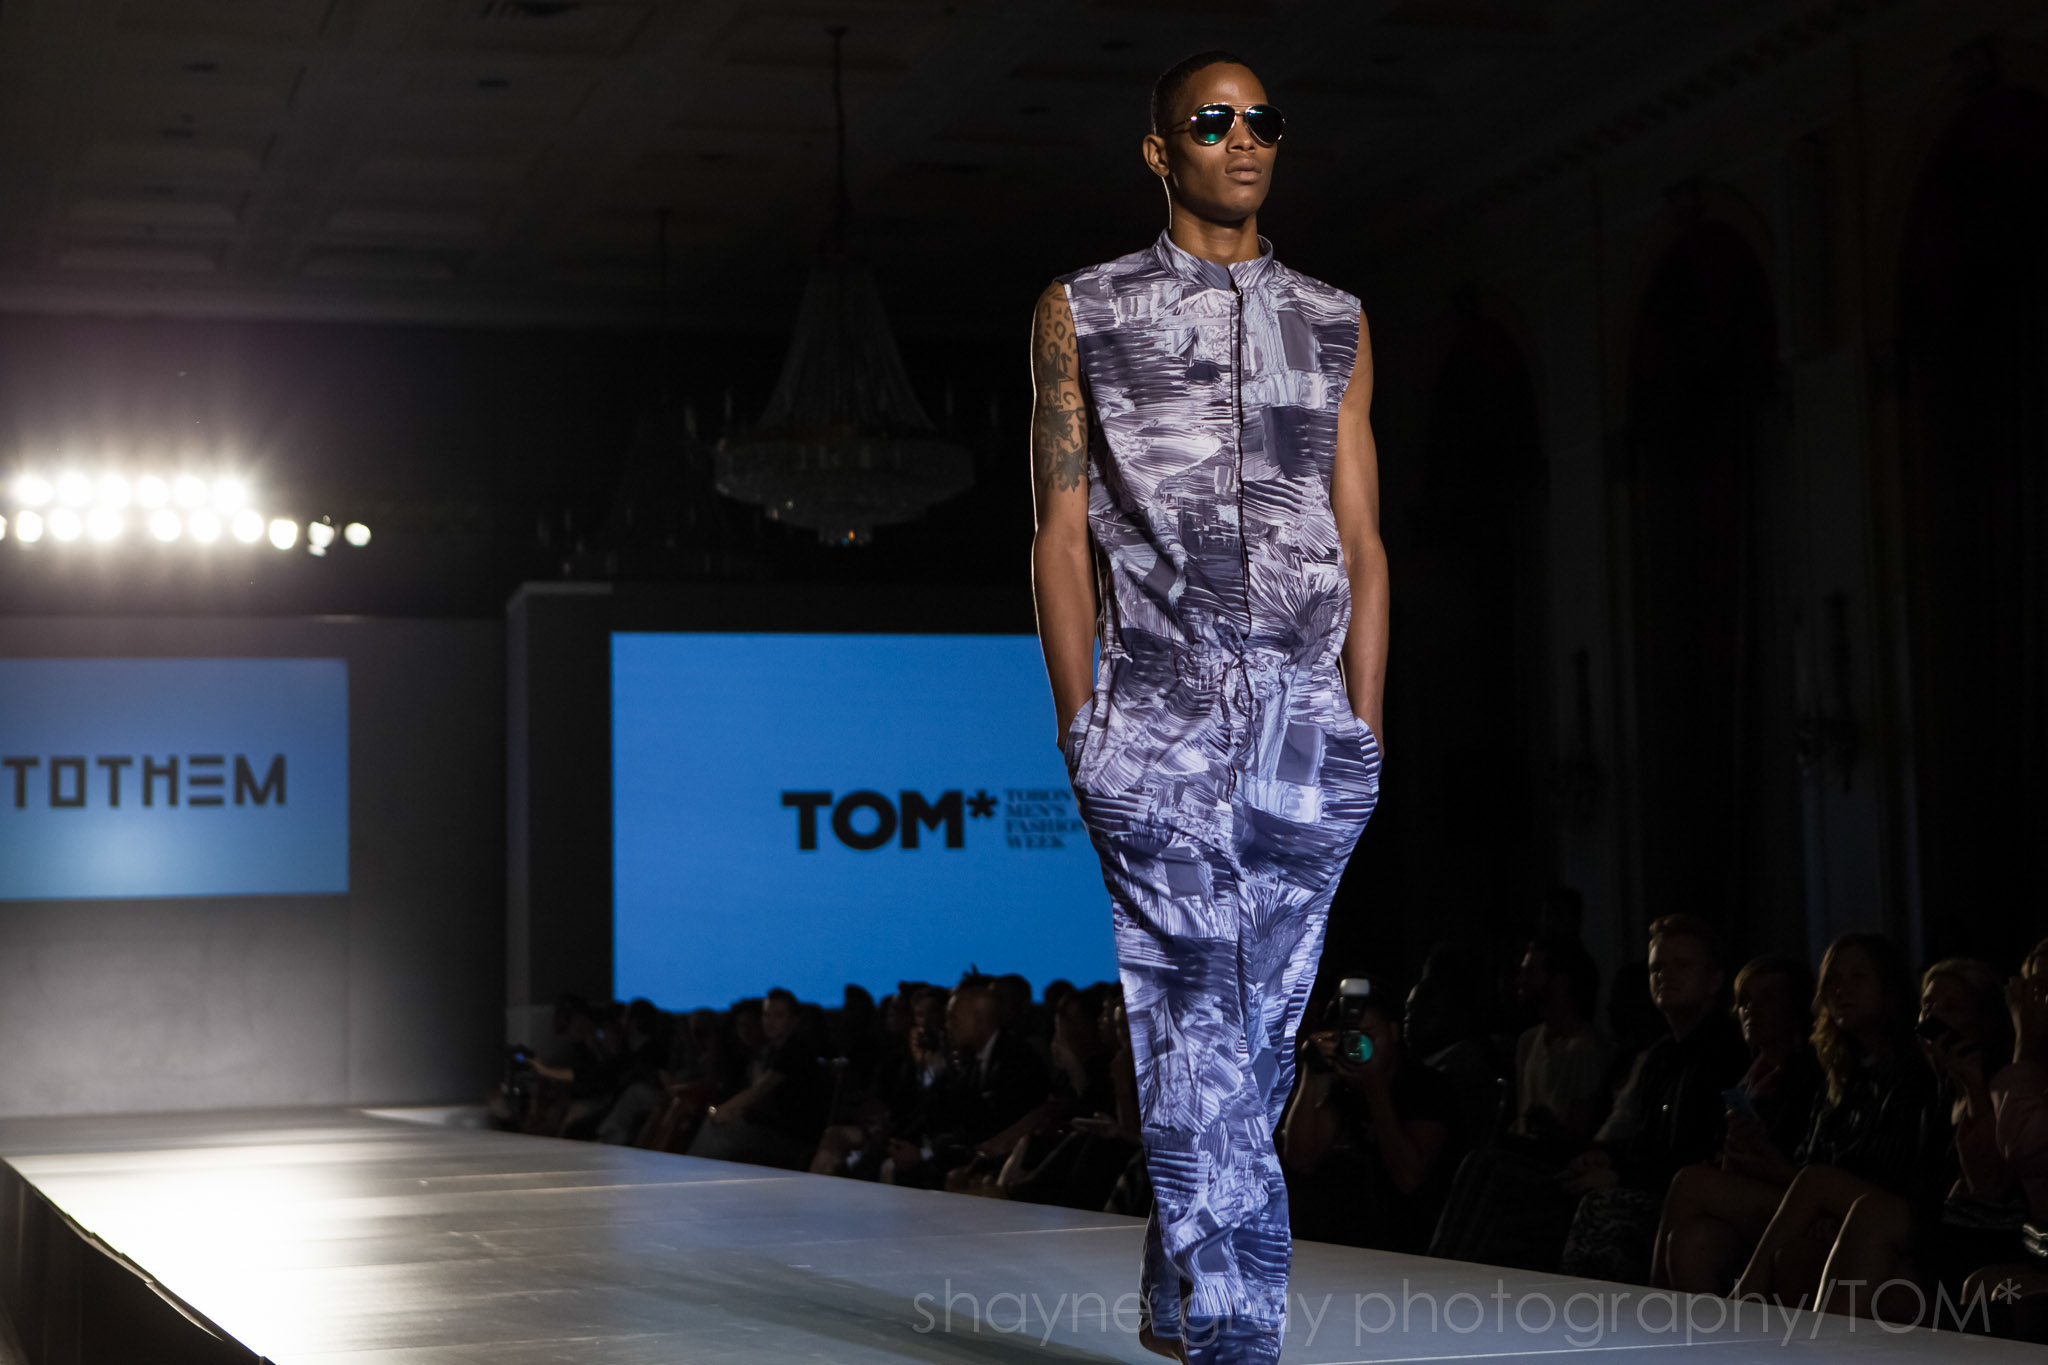 Shayne-Gray-Toronto-men's-fashion_week-TOM-tothem-6808.jpg